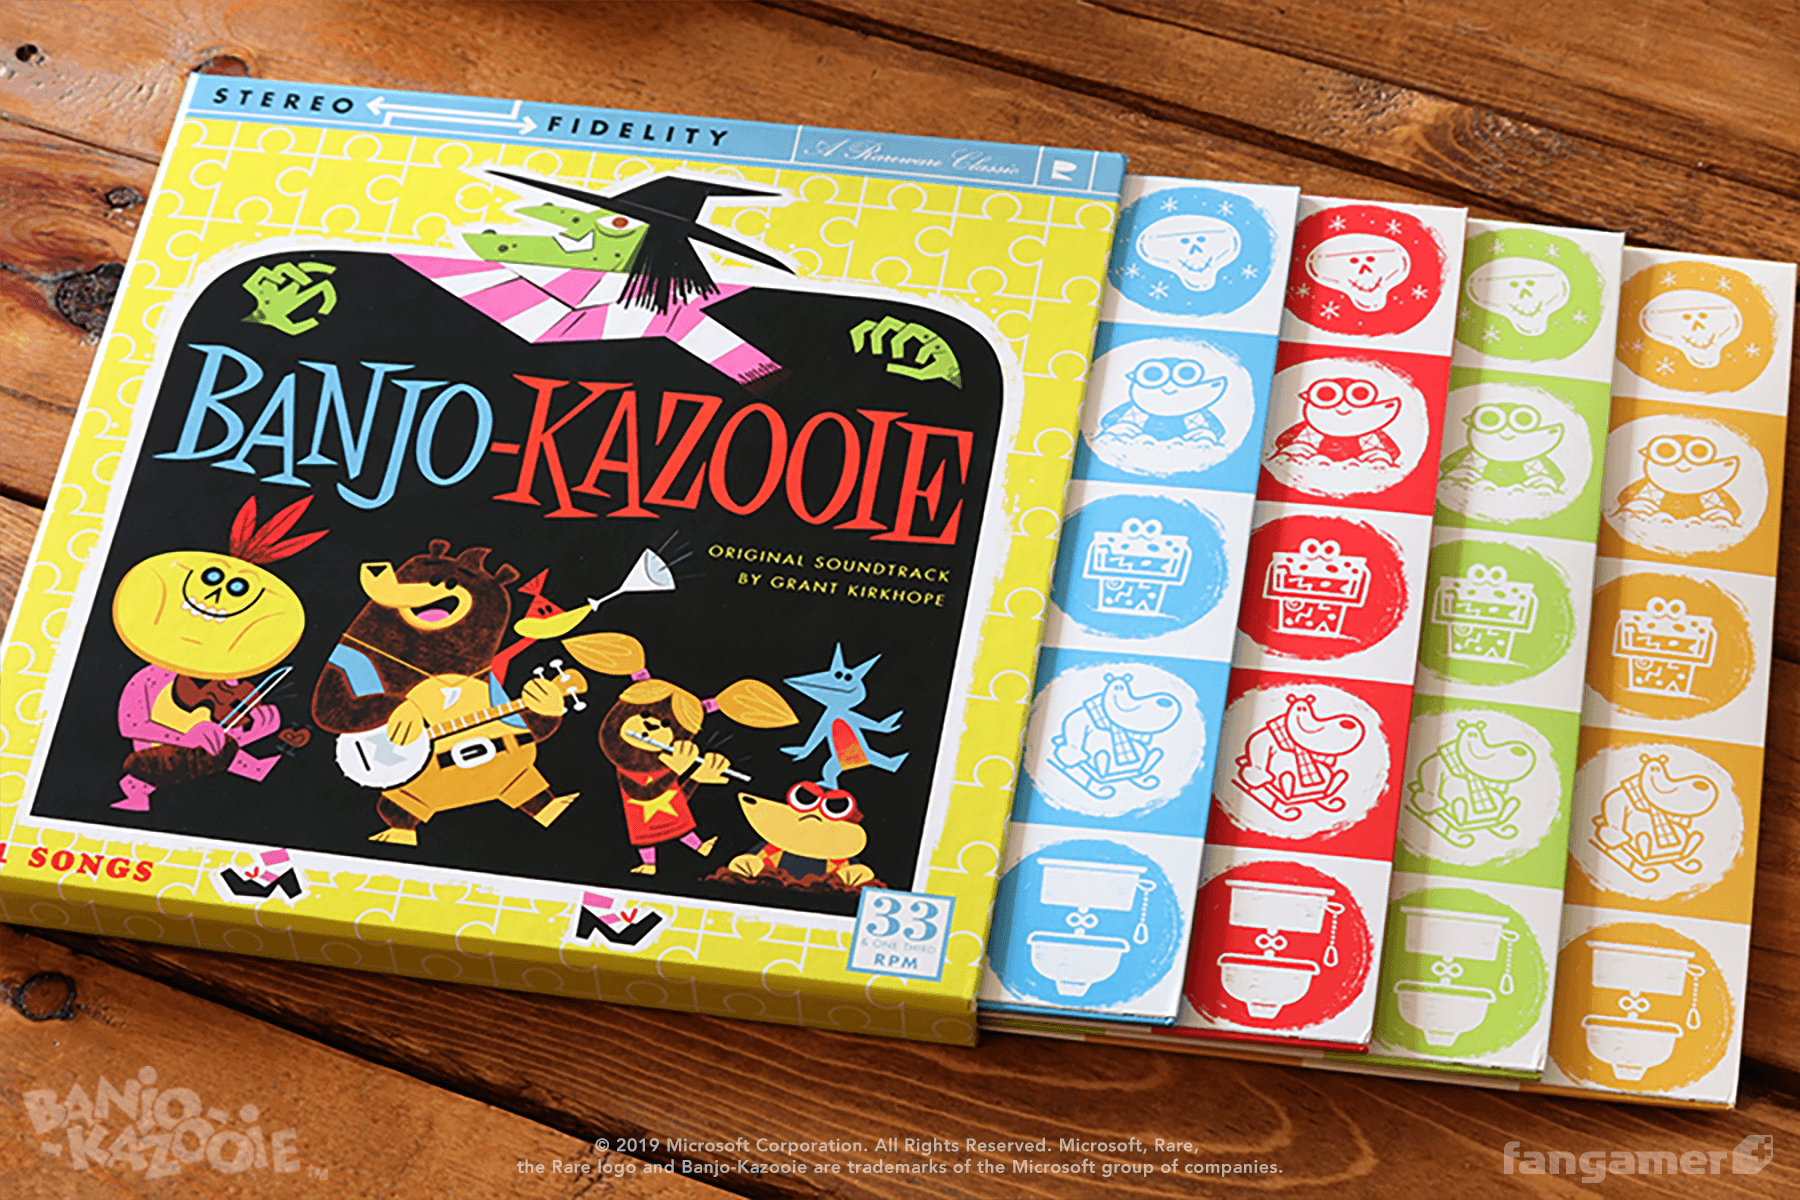 Banjo-Kazooie Vinyl Soundtrack Box Set - Fangamer